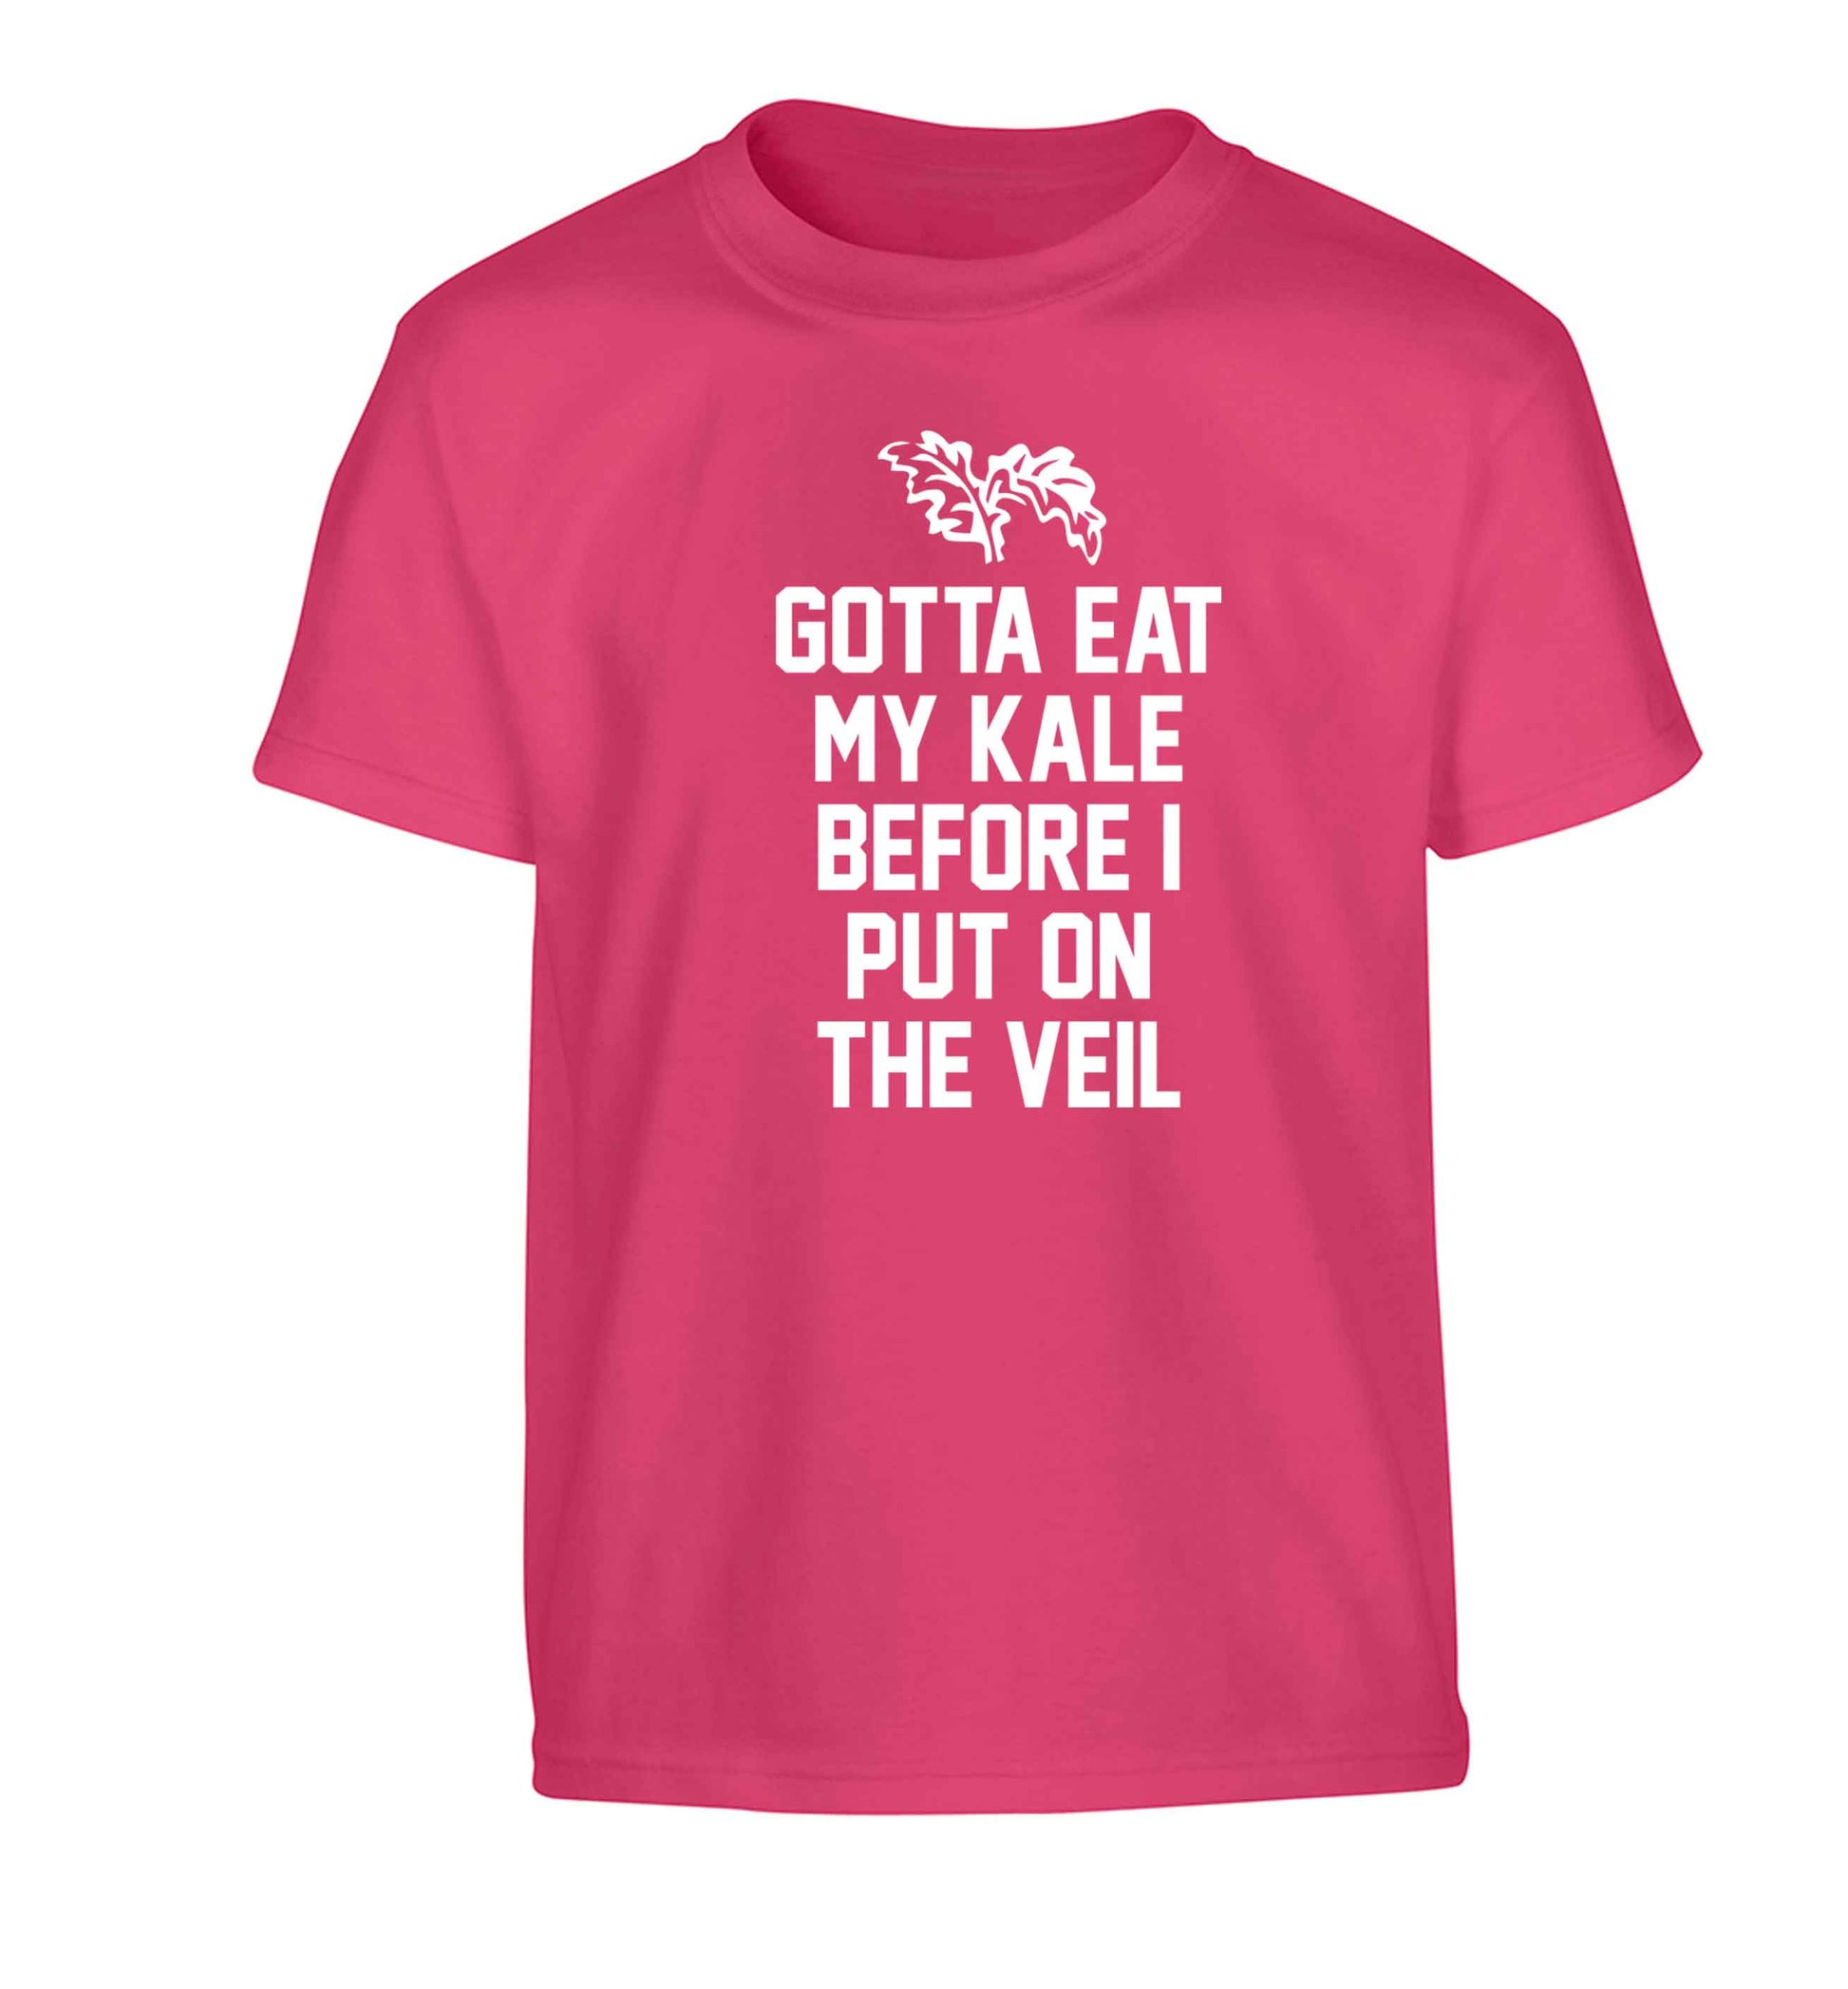 Gotta eat my kale before I put on the veil Children's pink Tshirt 12-13 Years